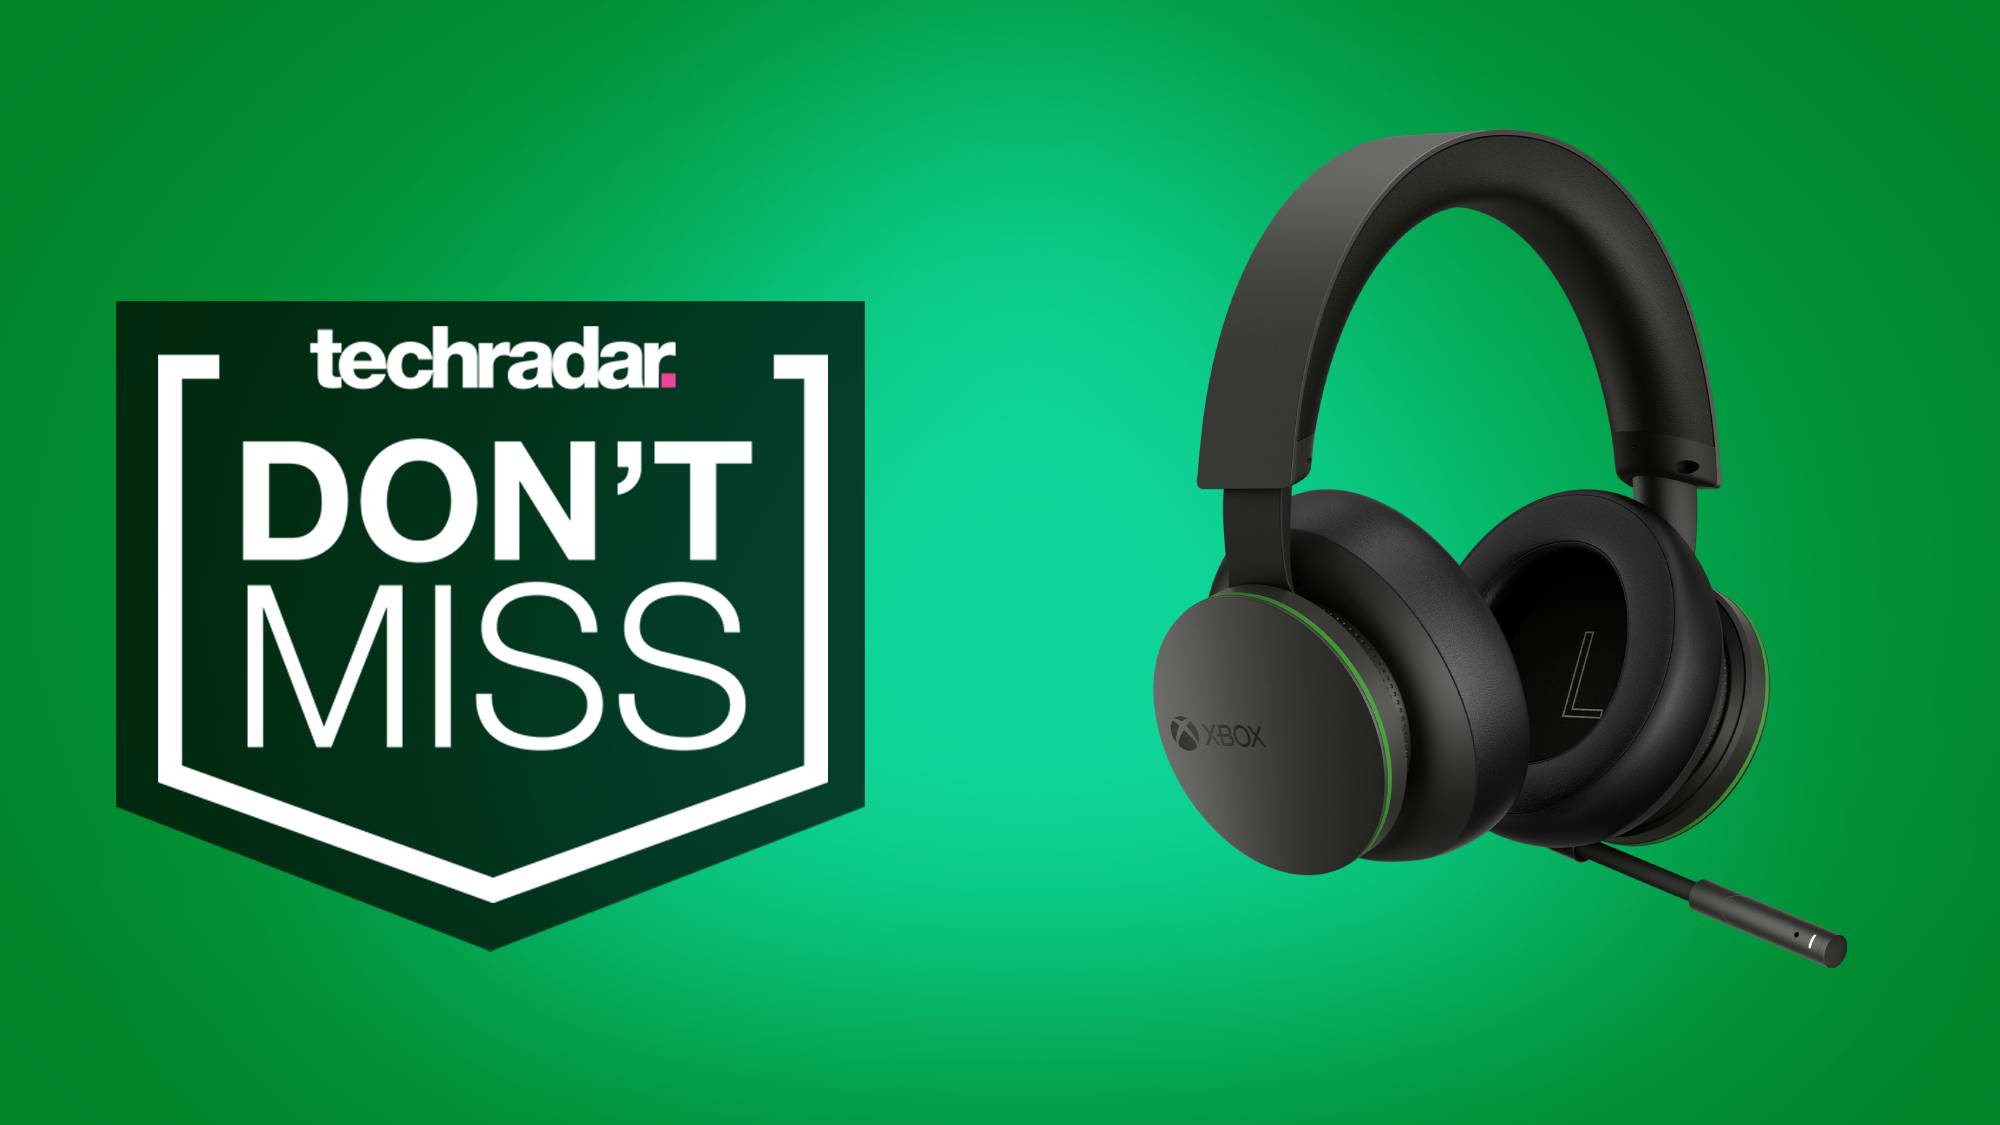 Xbox Wireless Headset Black Friday deal